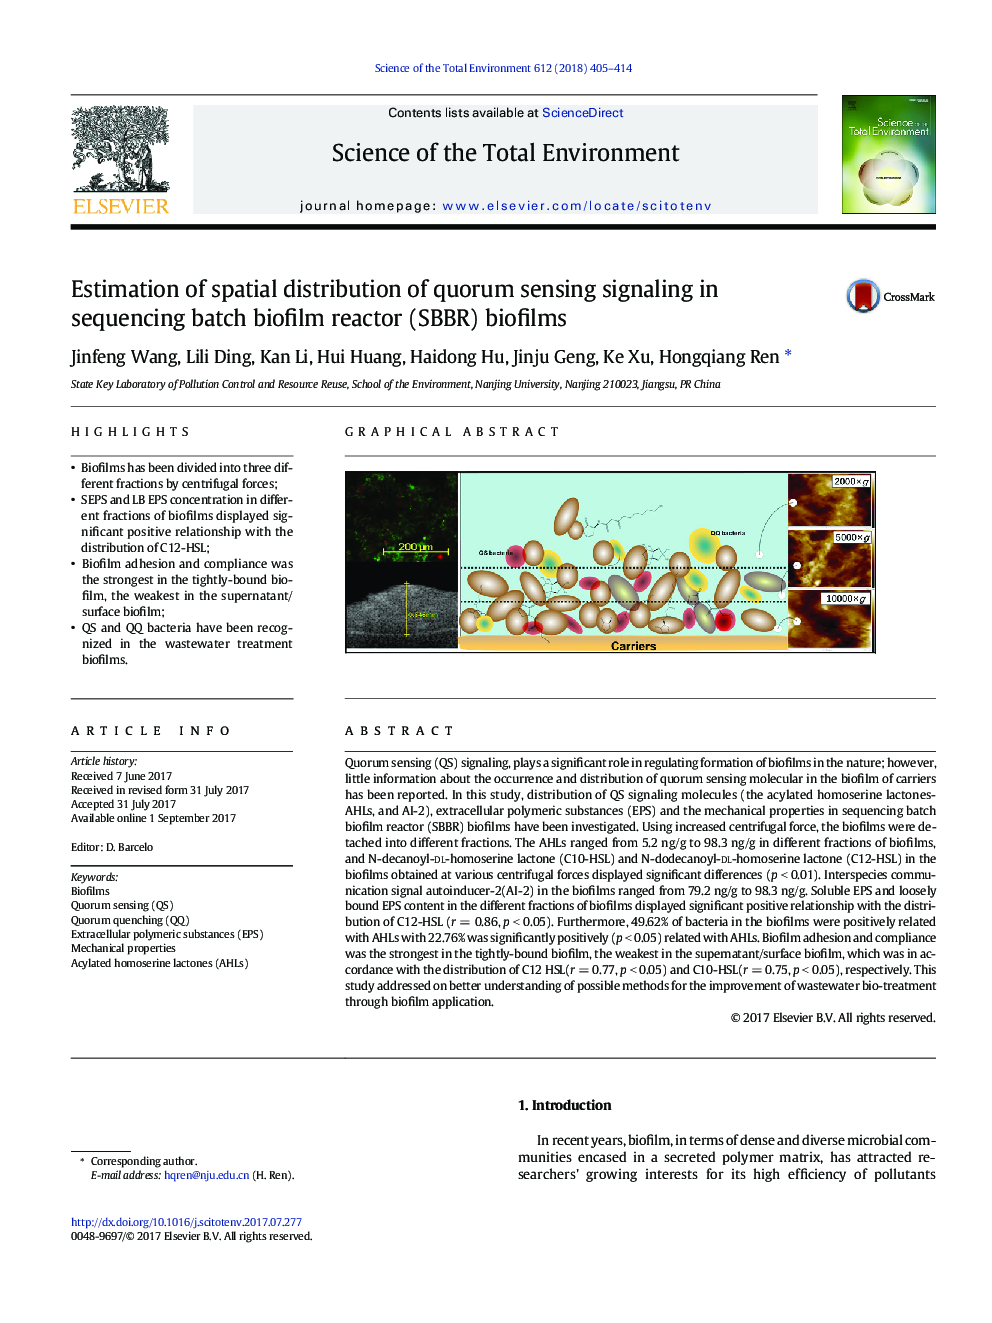 Estimation of spatial distribution of quorum sensing signaling in sequencing batch biofilm reactor (SBBR) biofilms